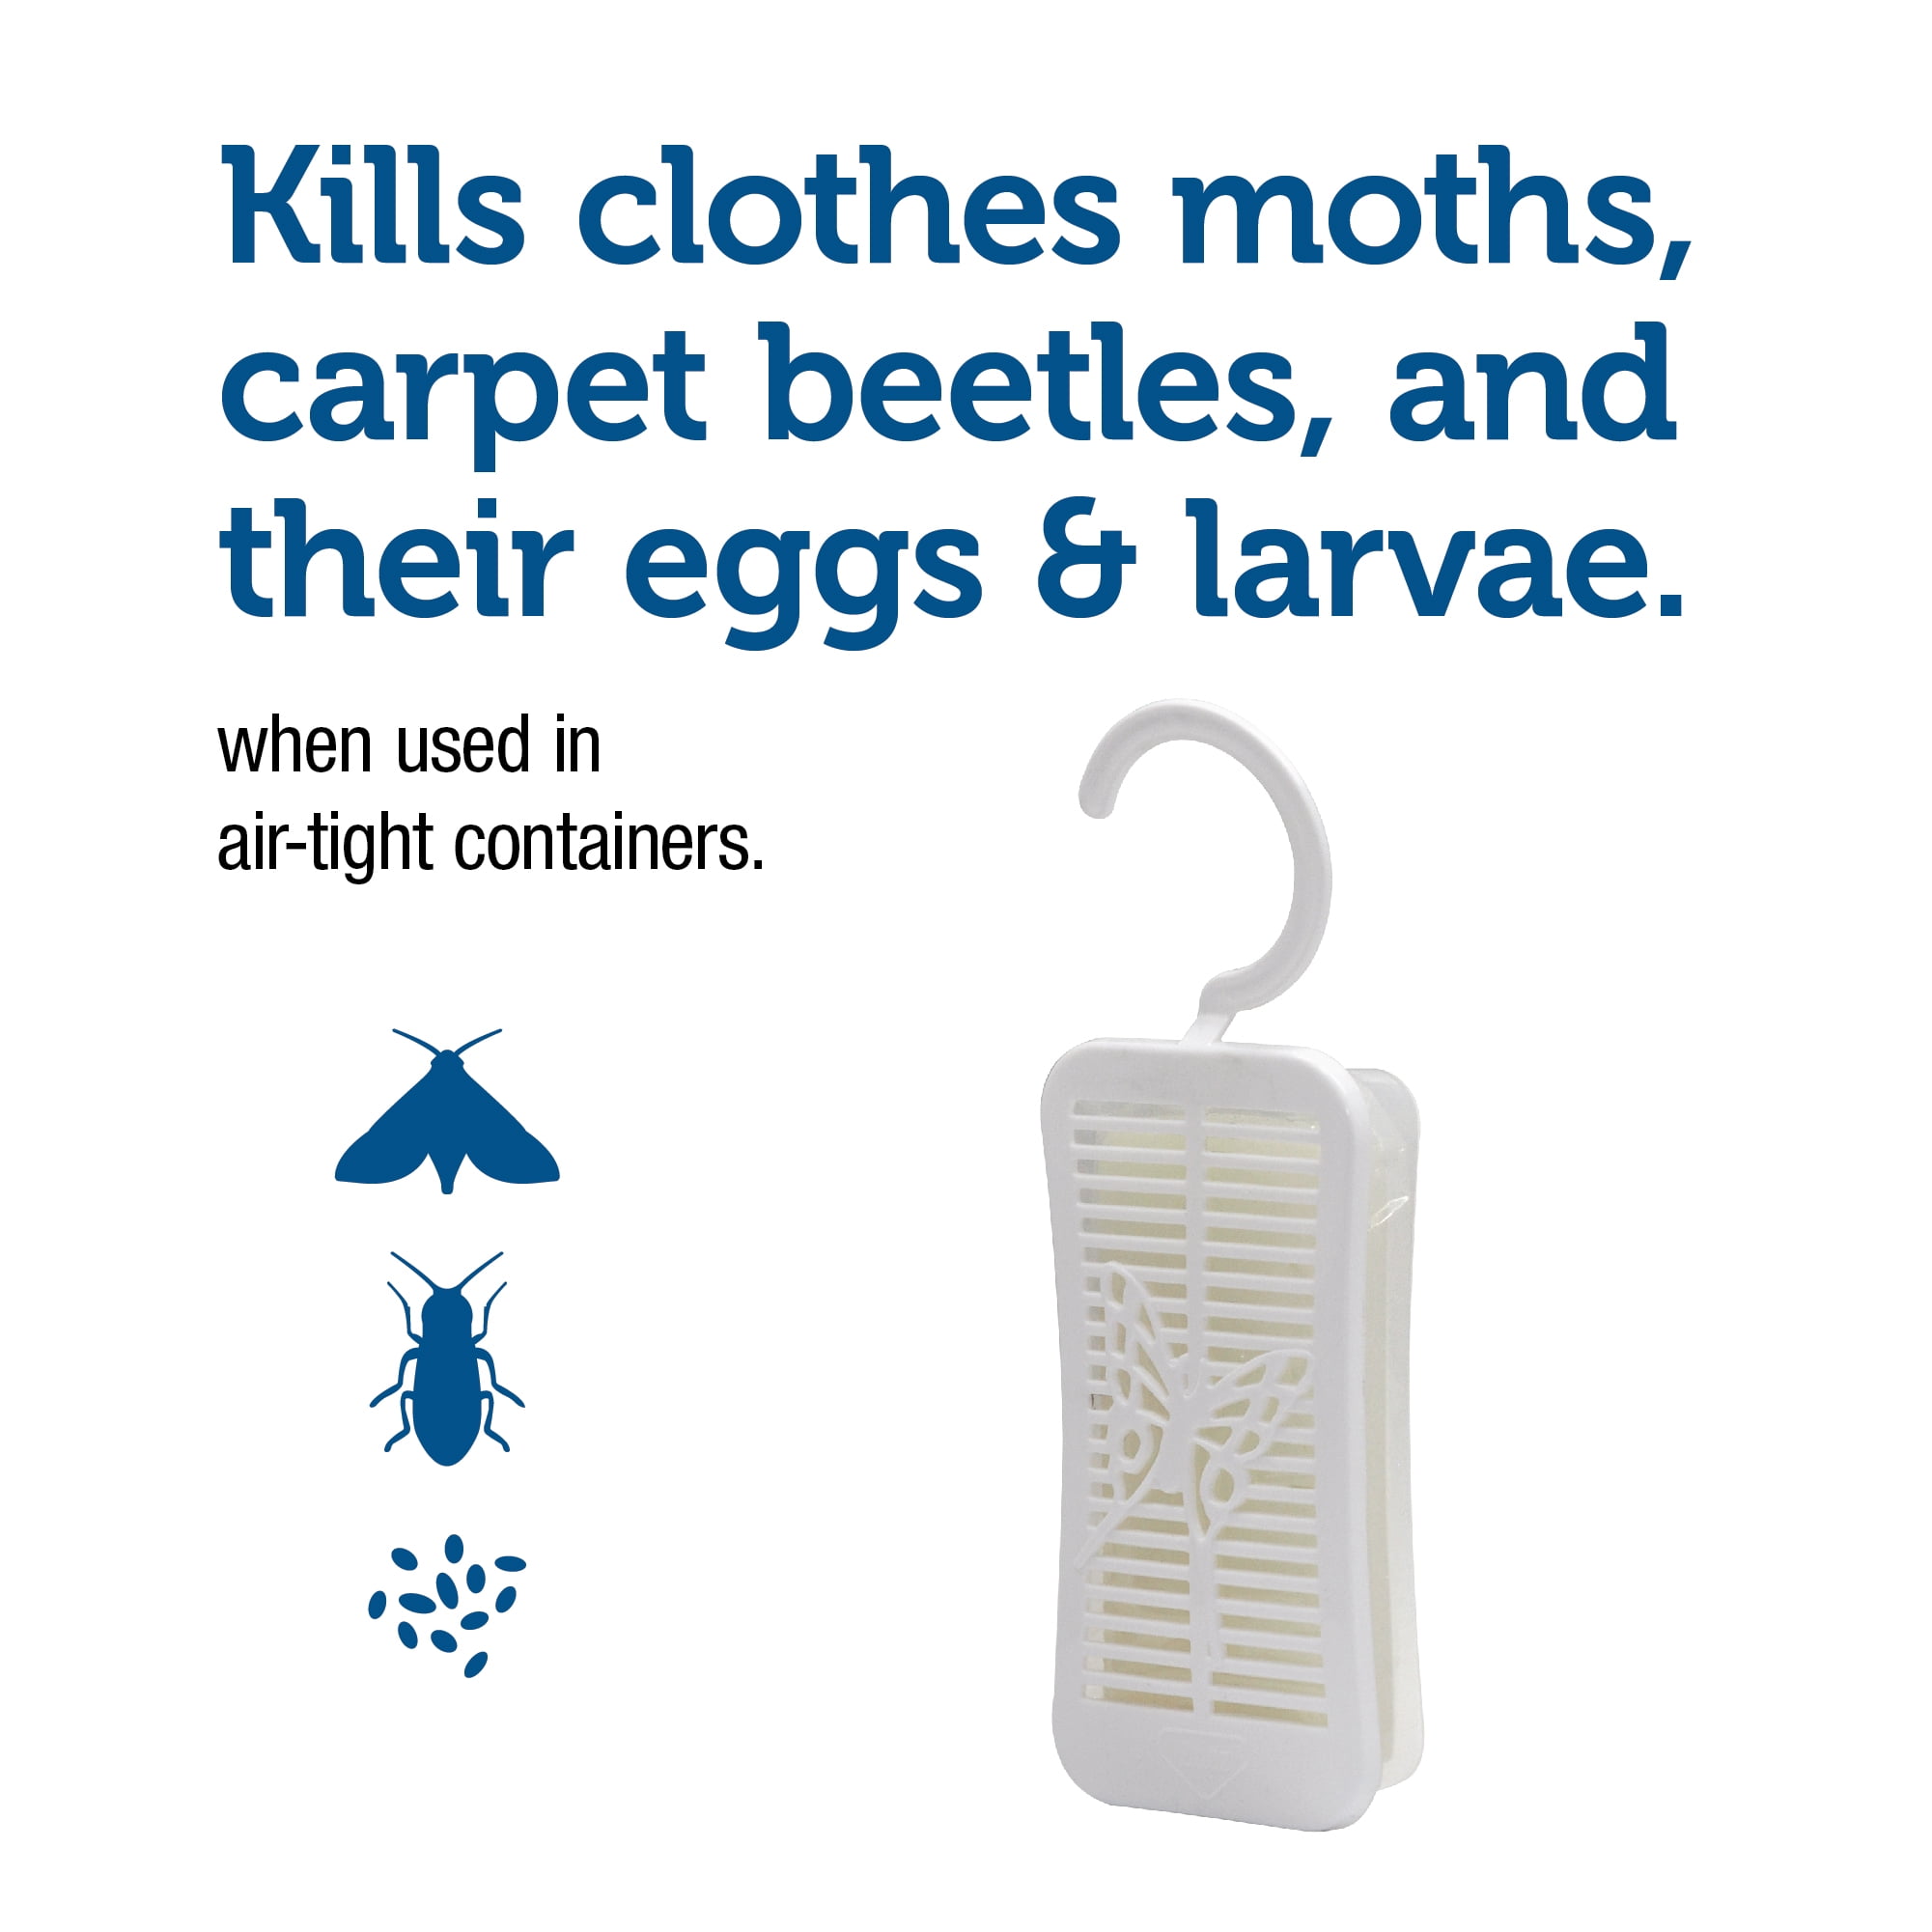 Clothes Moth Killer Kit - Extreme Power. Kill Moths, Larvae and Eggs